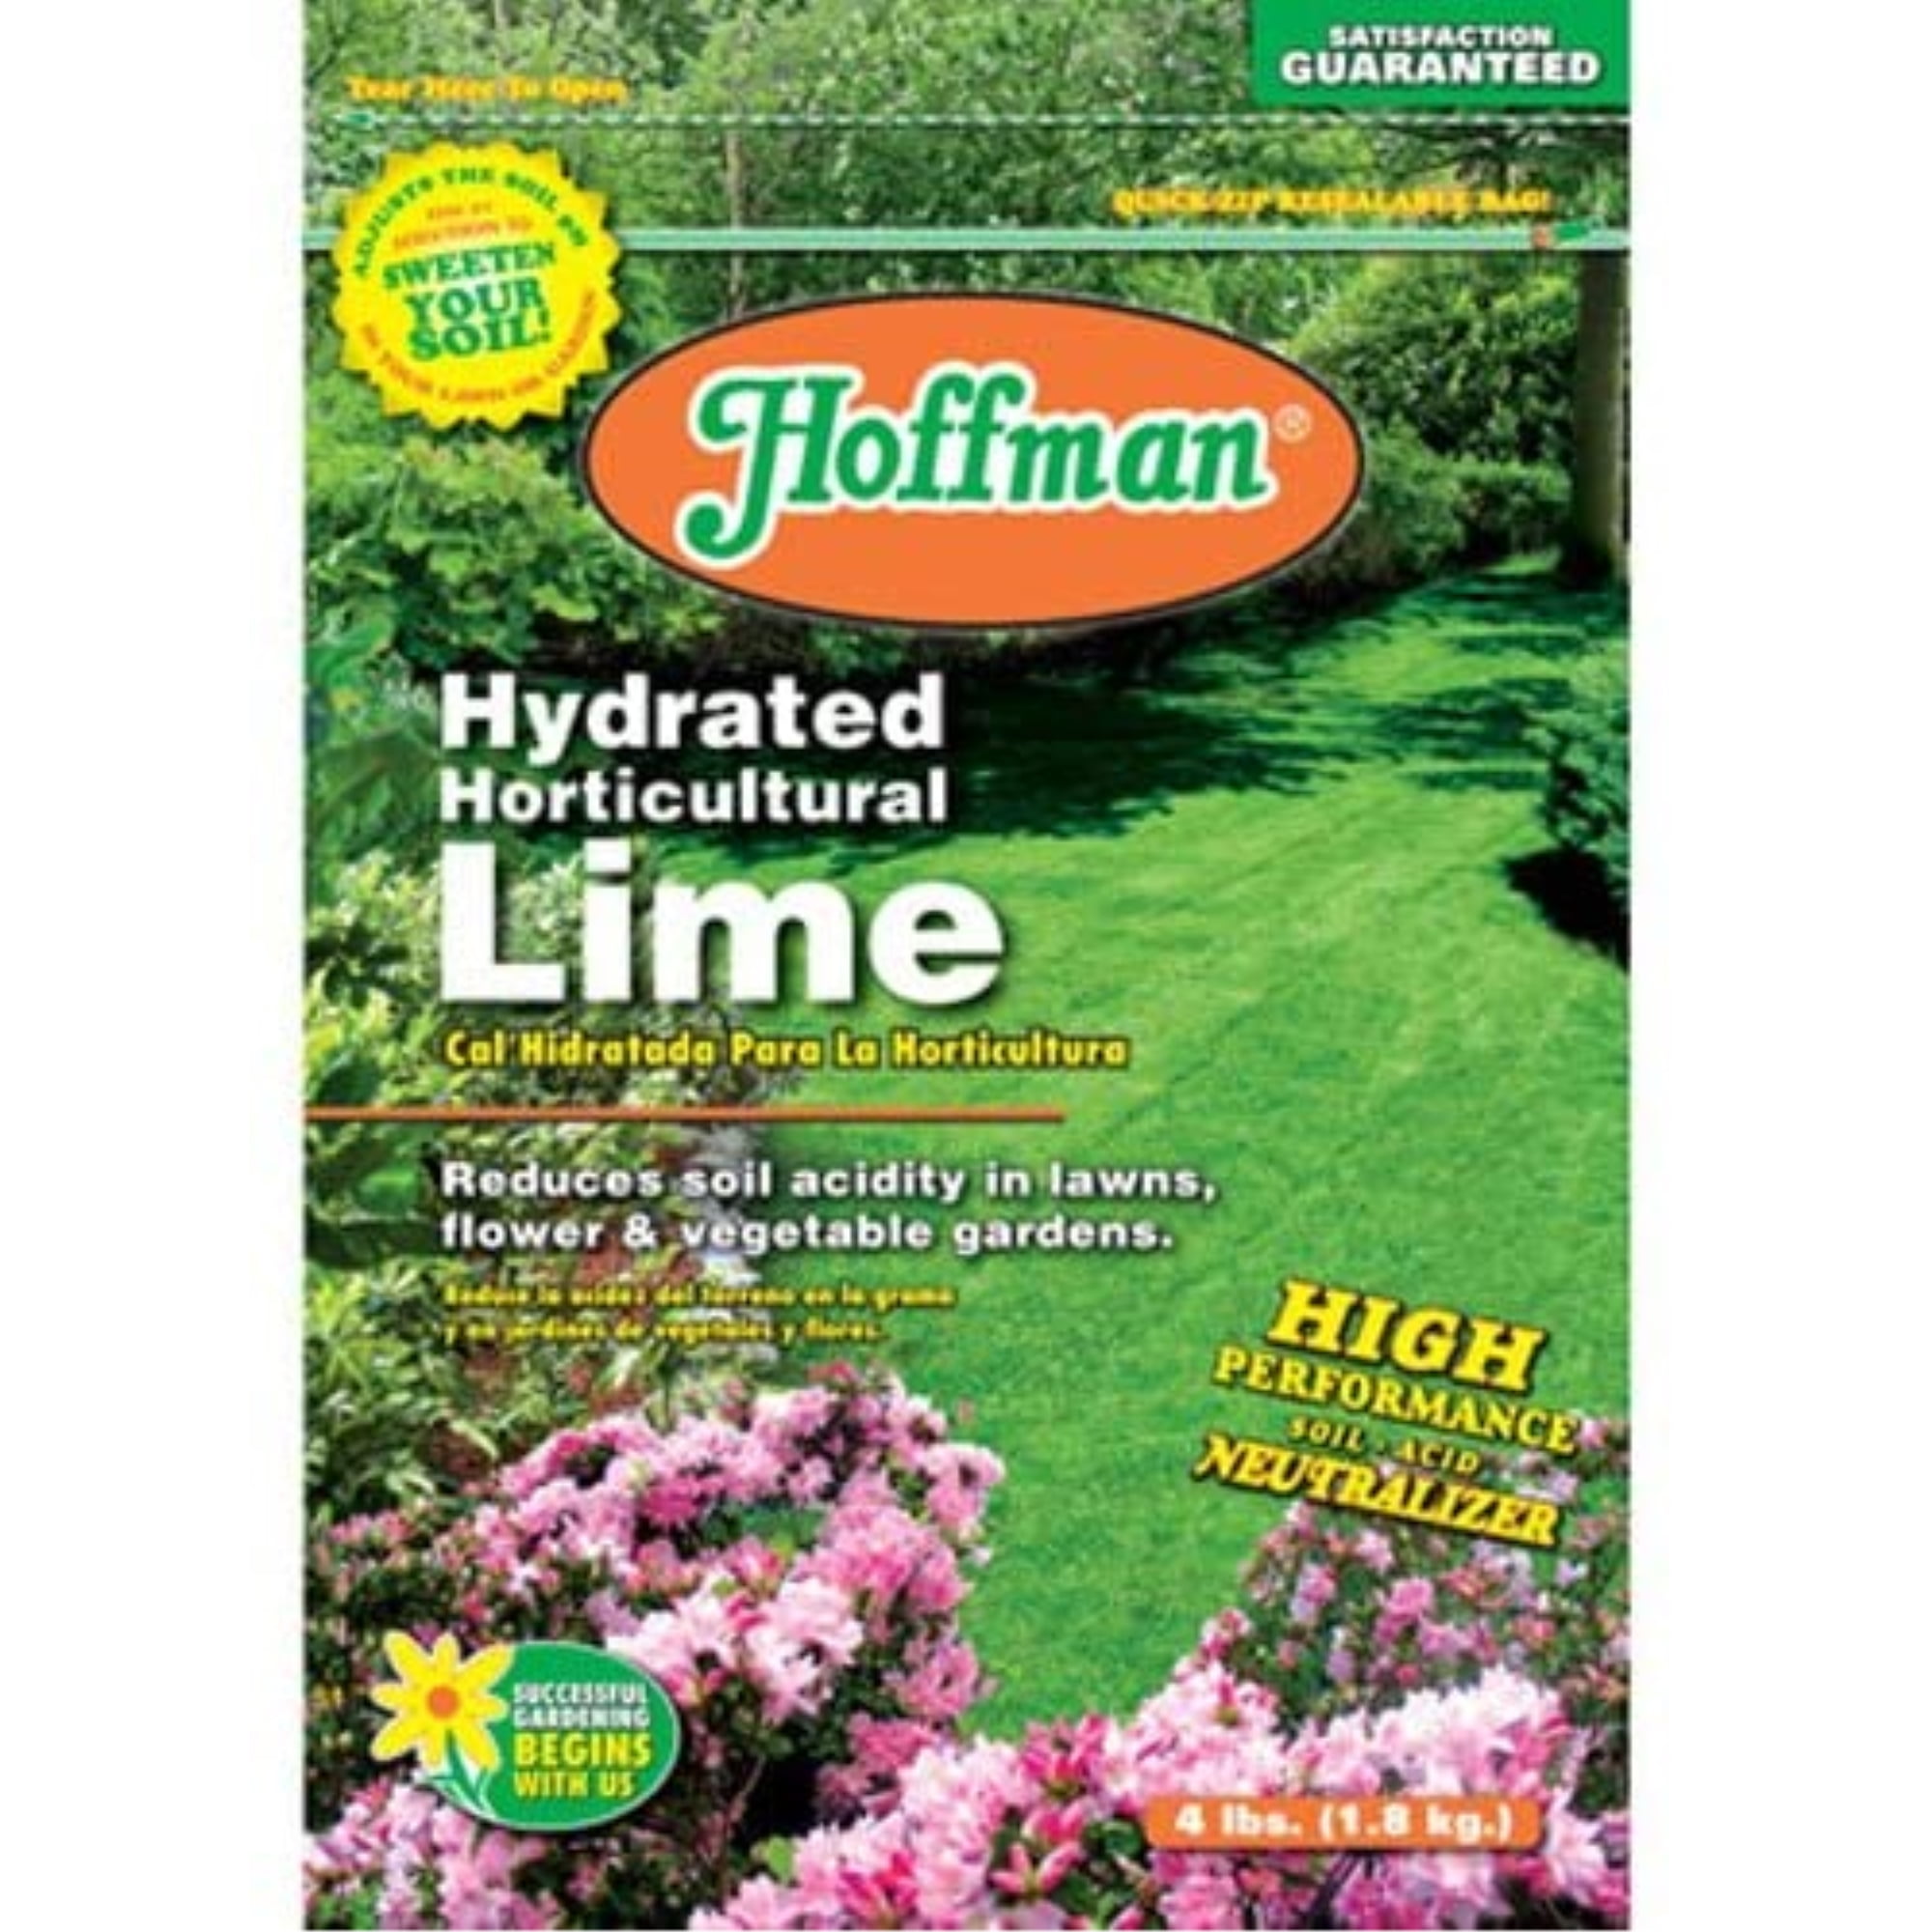 Buy Hoffman Horticultural Charcoal Online